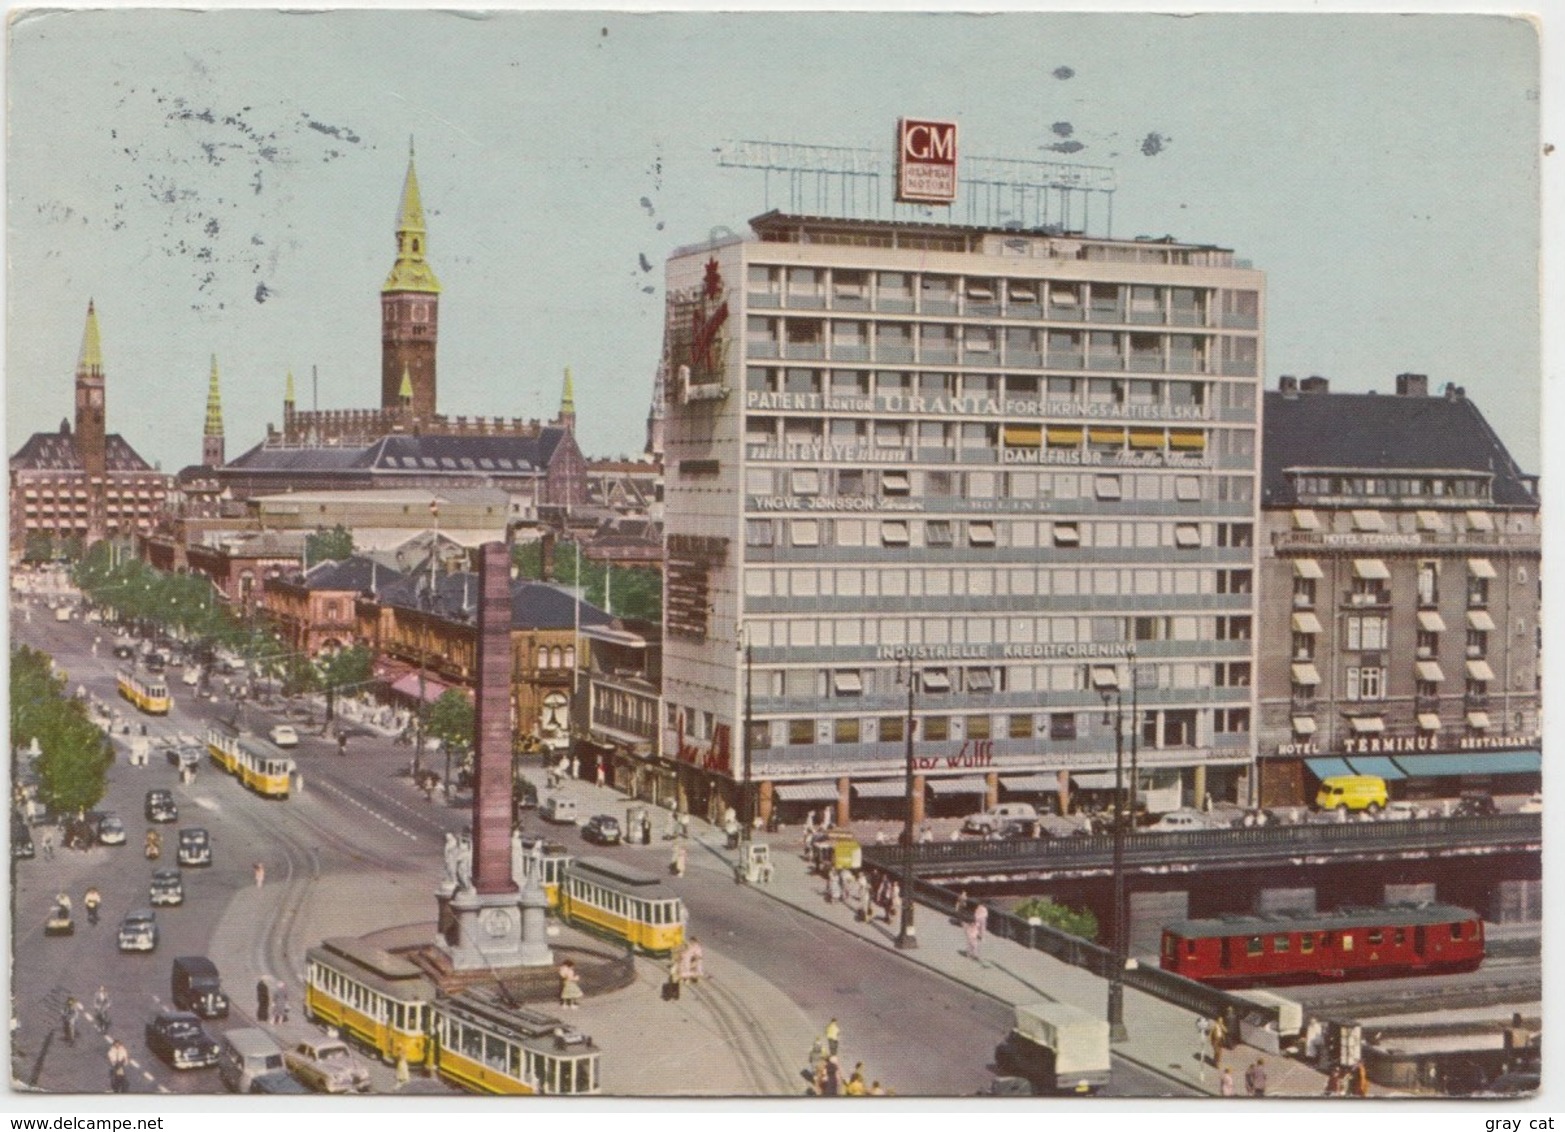 KOBENHAVN, COPENHAGEN, Vesterbros Passage, Liberty Column, 1958 Used Postcard [22190] - Denmark